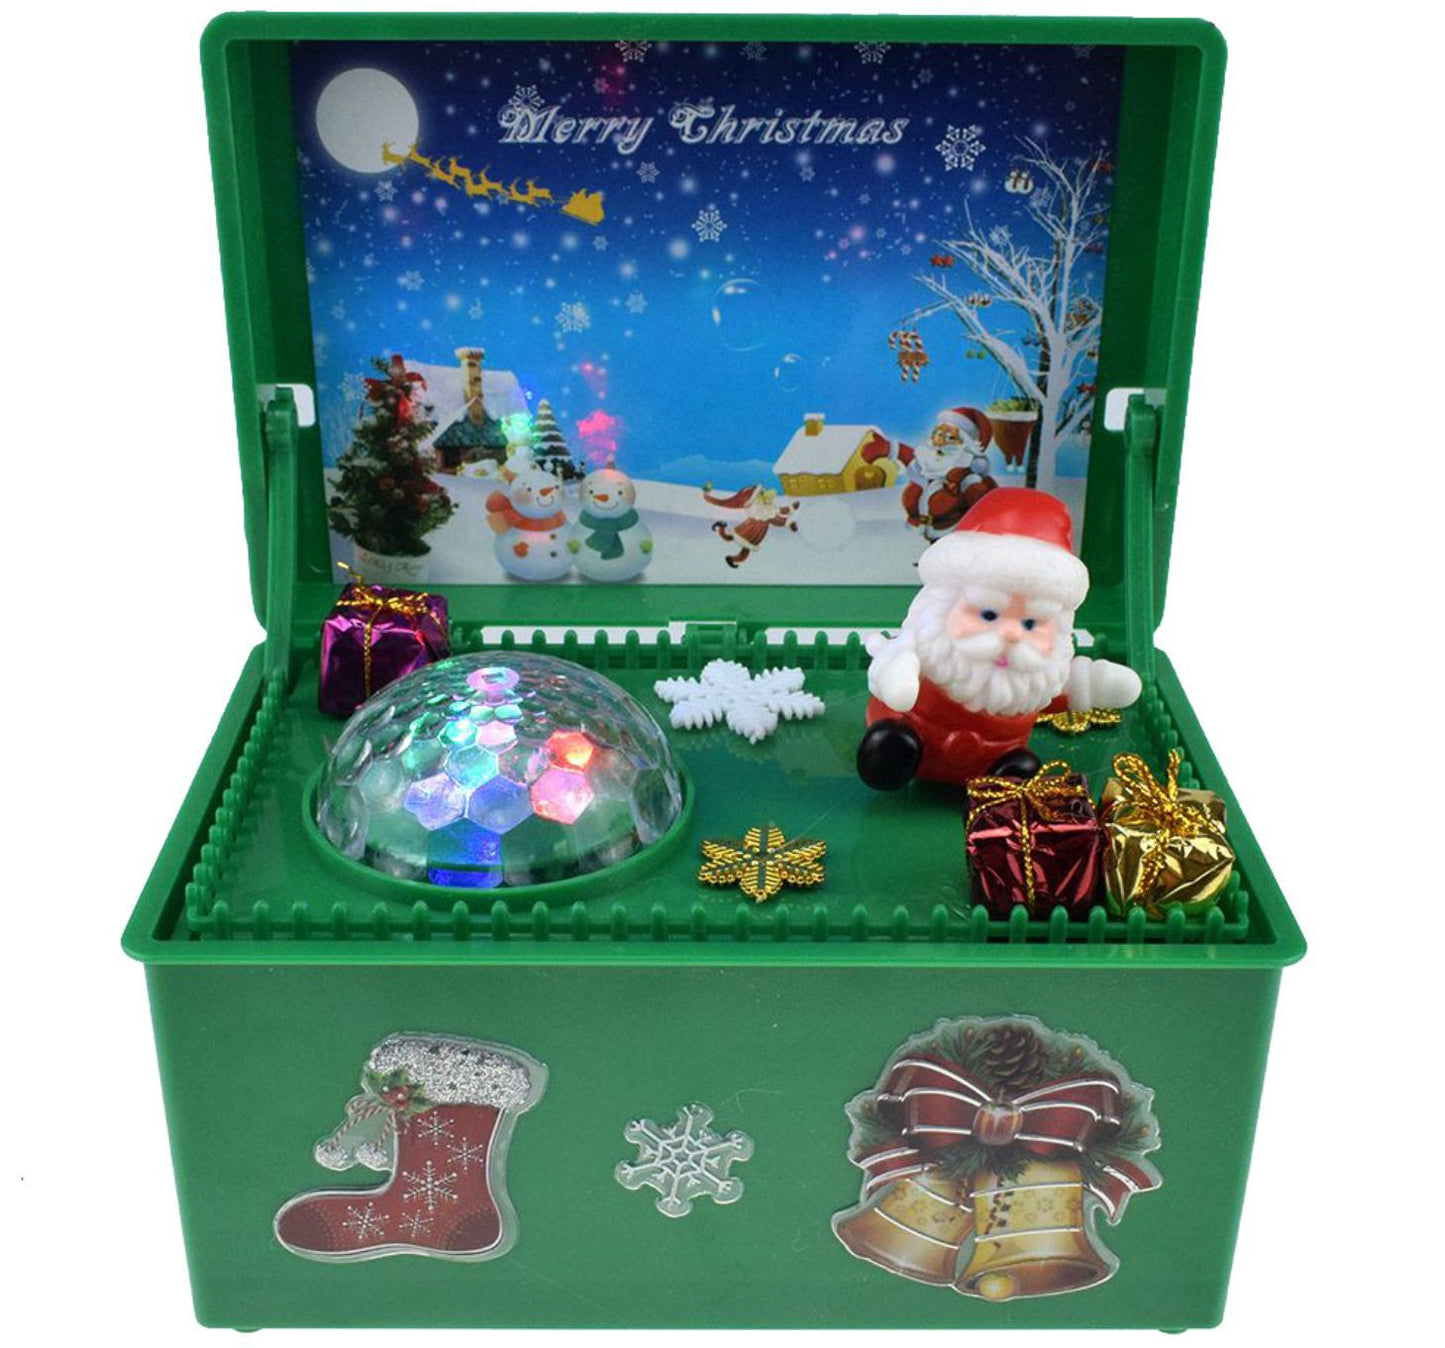 Electric lift Christmas music gift box